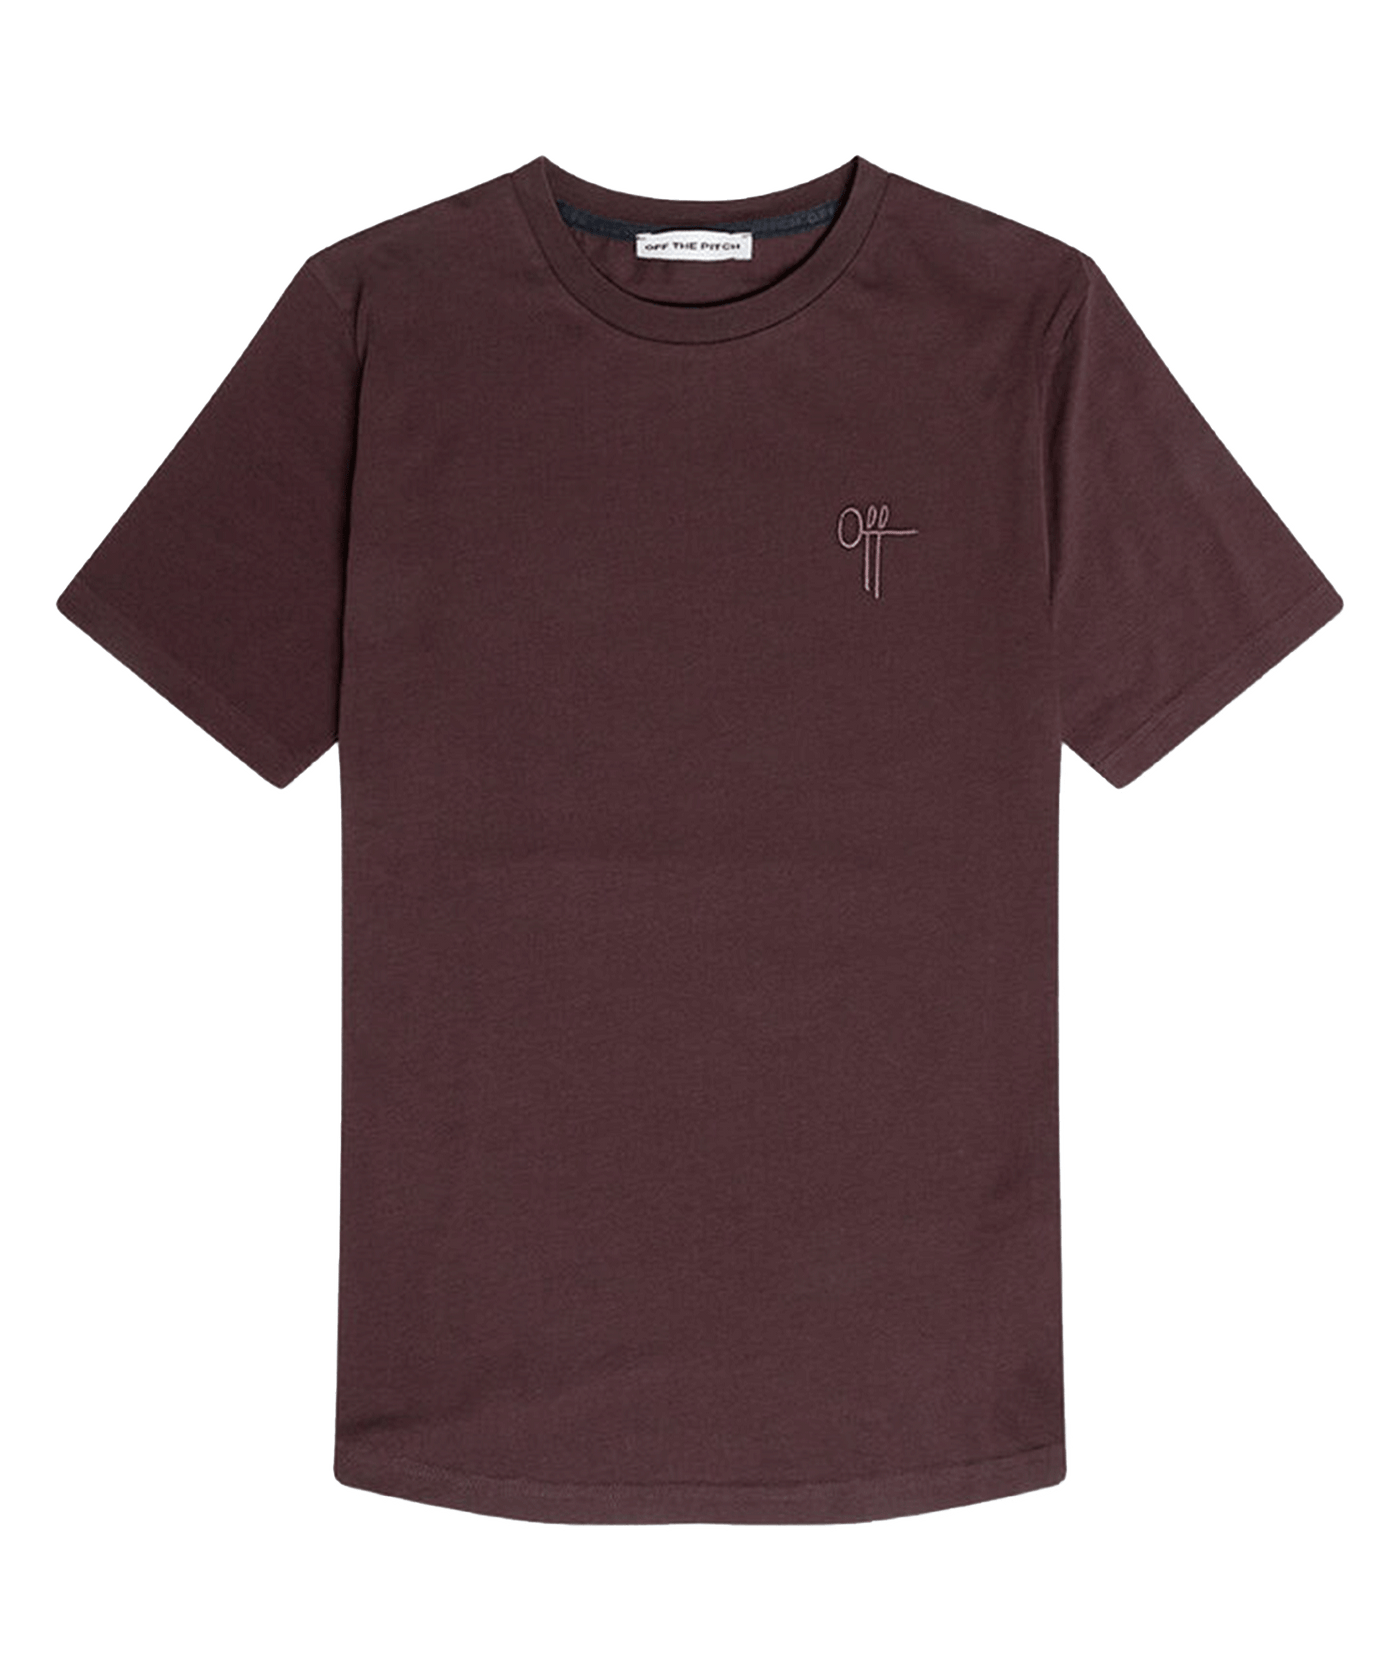 Off The Pitch - Otp233057 - Gradient Backburn T-shirt - 802 Java